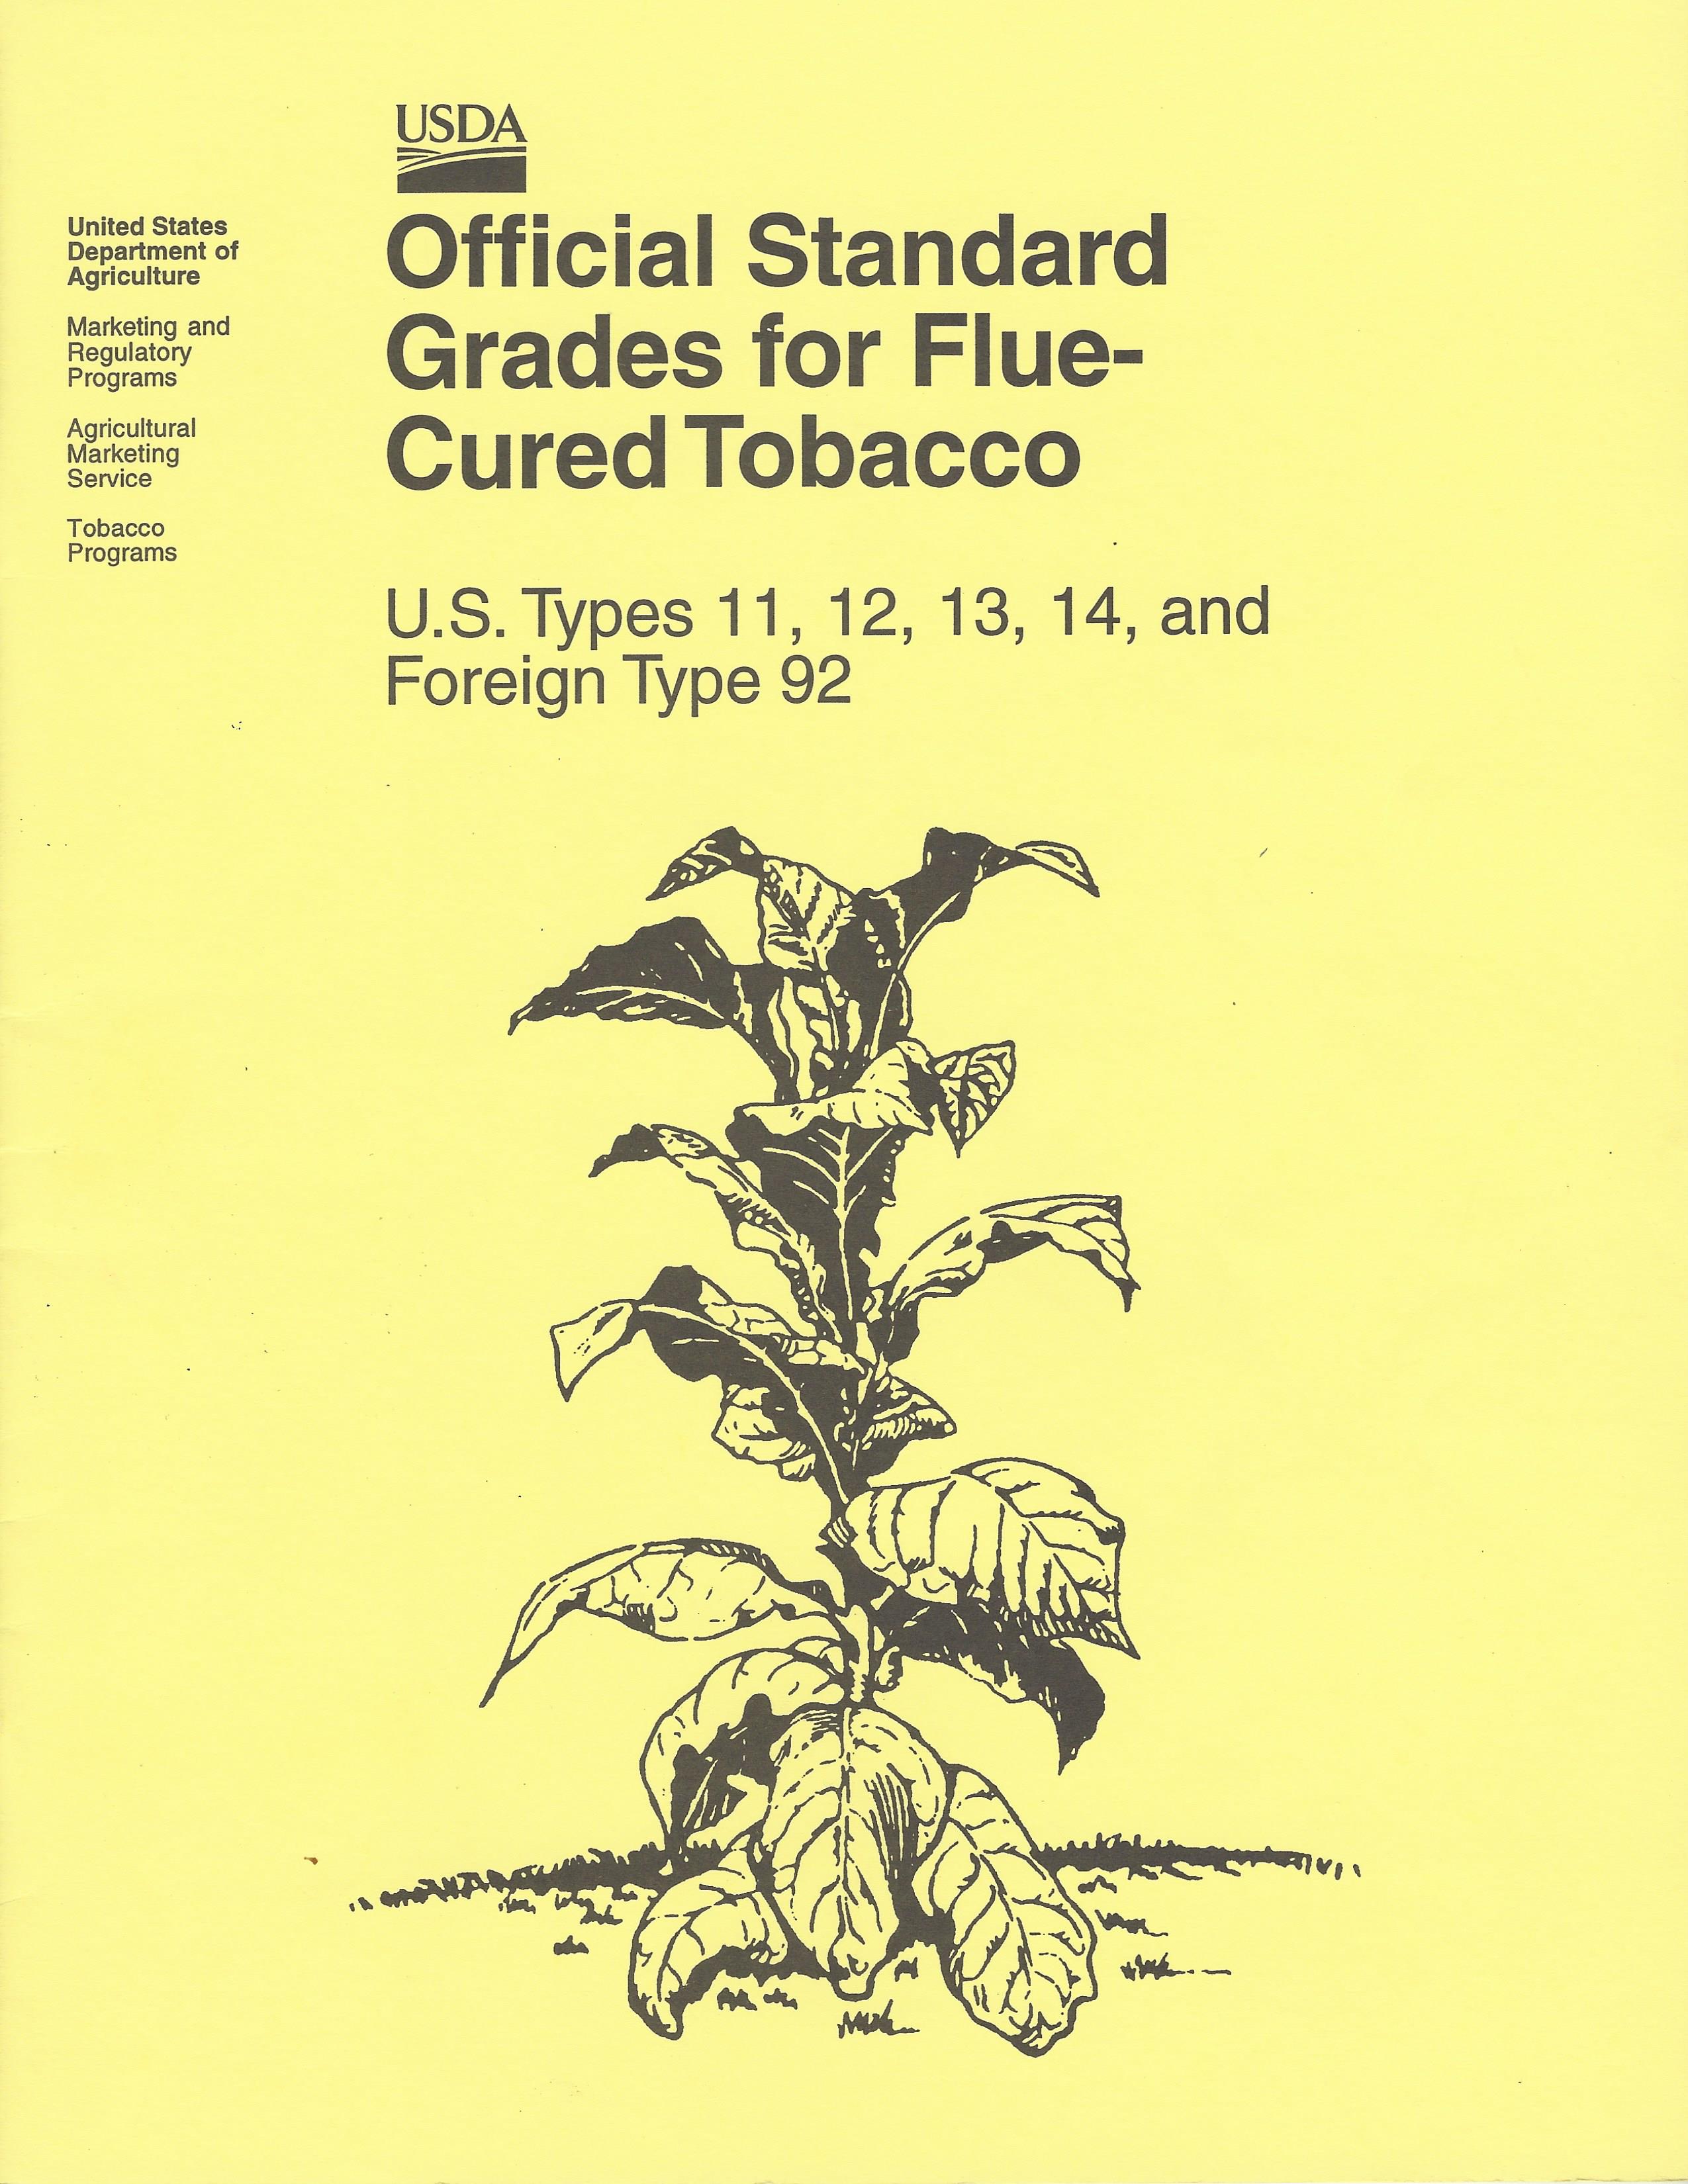 USDA Standard Grades